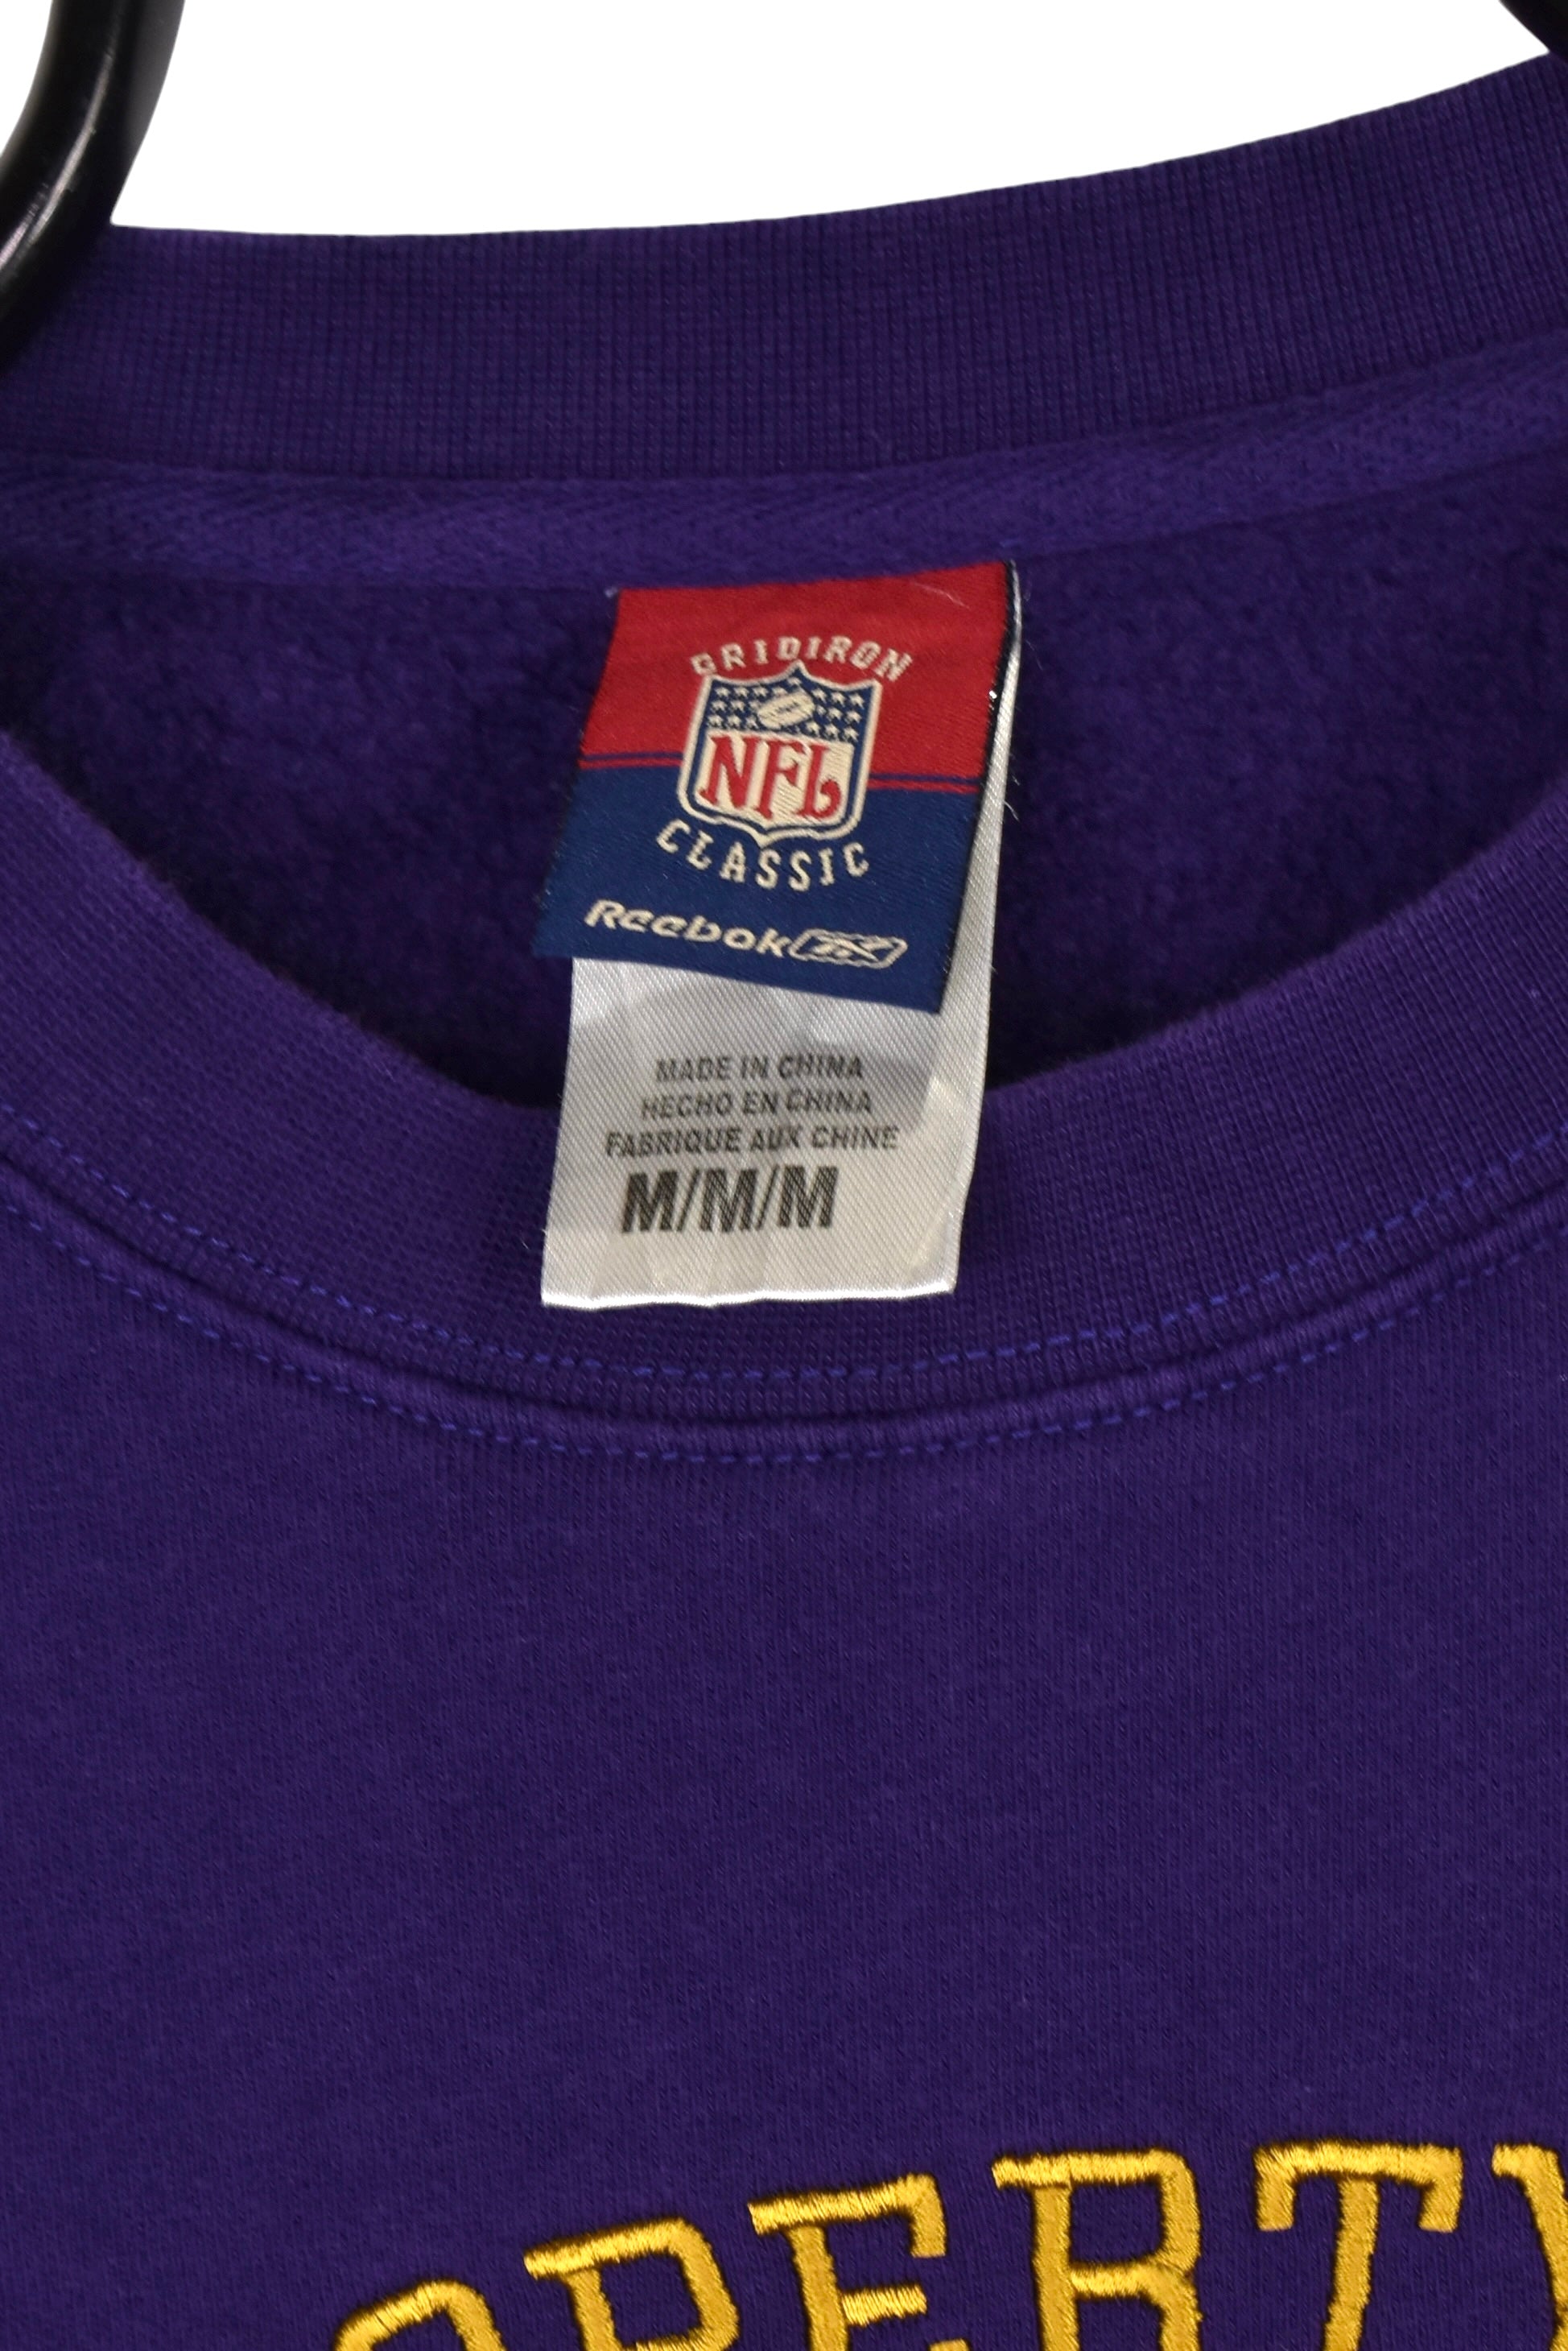 Vintage Baltimore Ravens sweatshirt (L), purple NFL embroidered crewneck